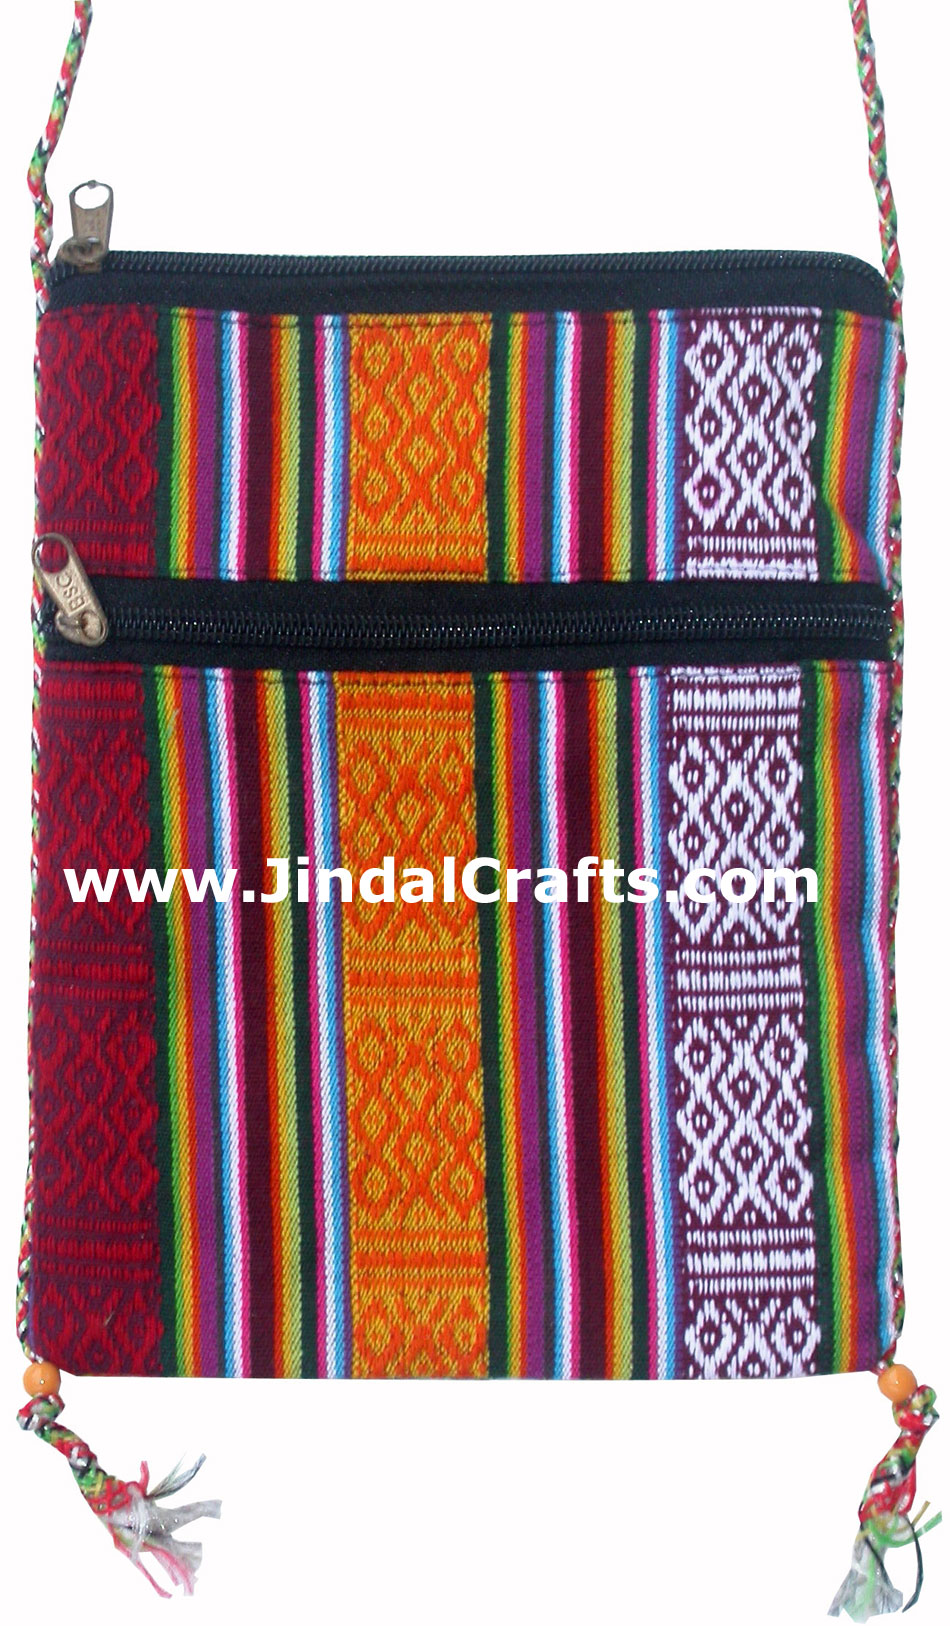 Hand Made Cotton Fabric Traditional Shoulder Passport Handbag from India